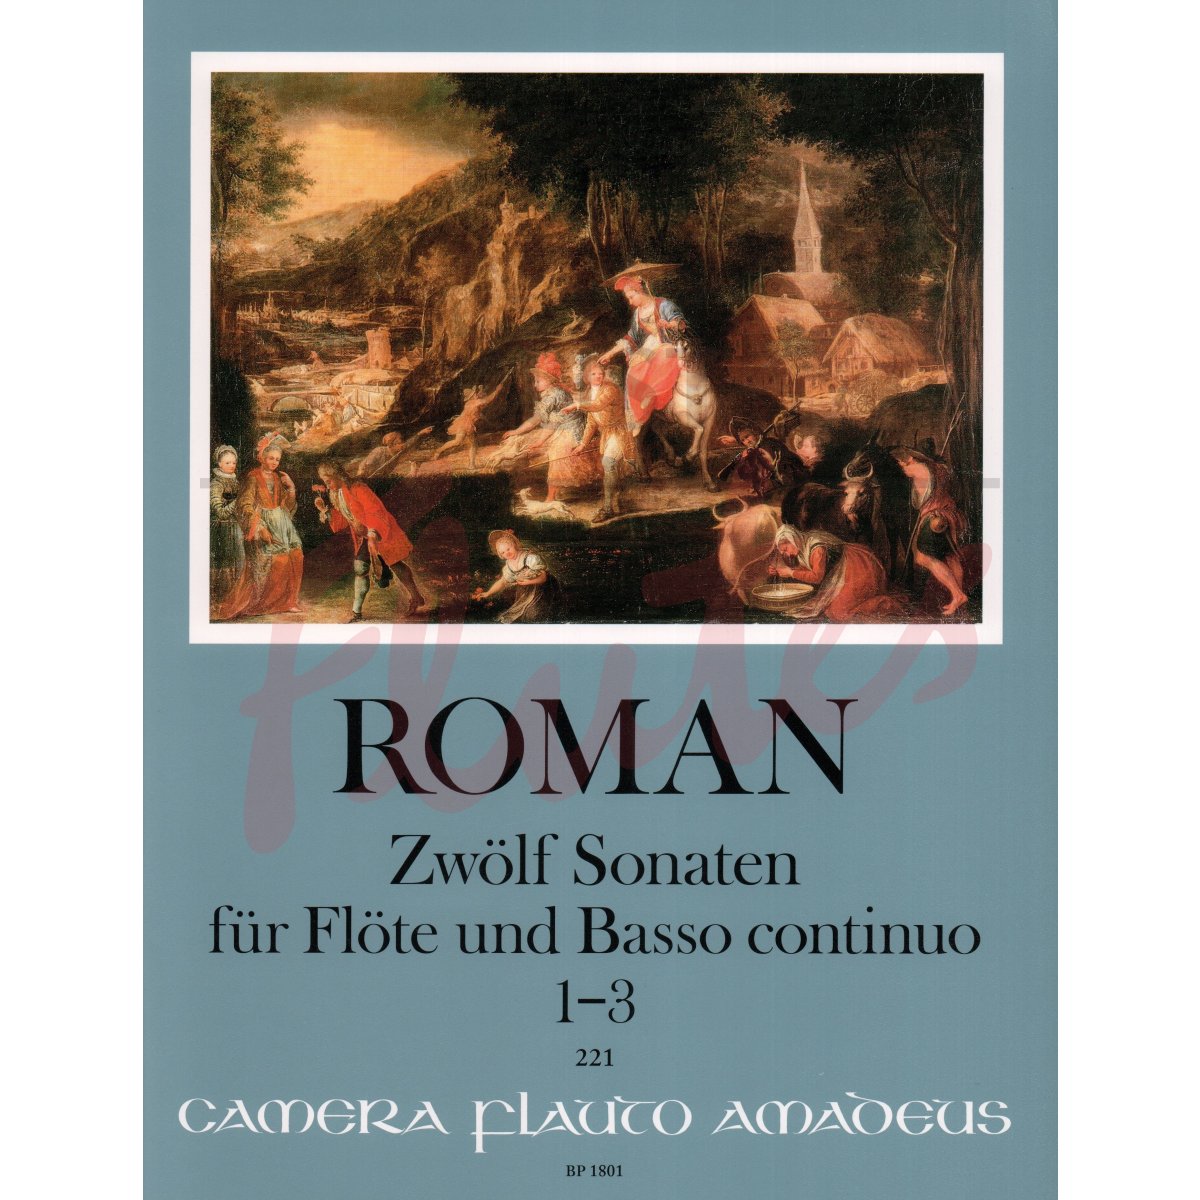 12 Sonatas Book 1: 1-3 for Flute and Basso Continuo